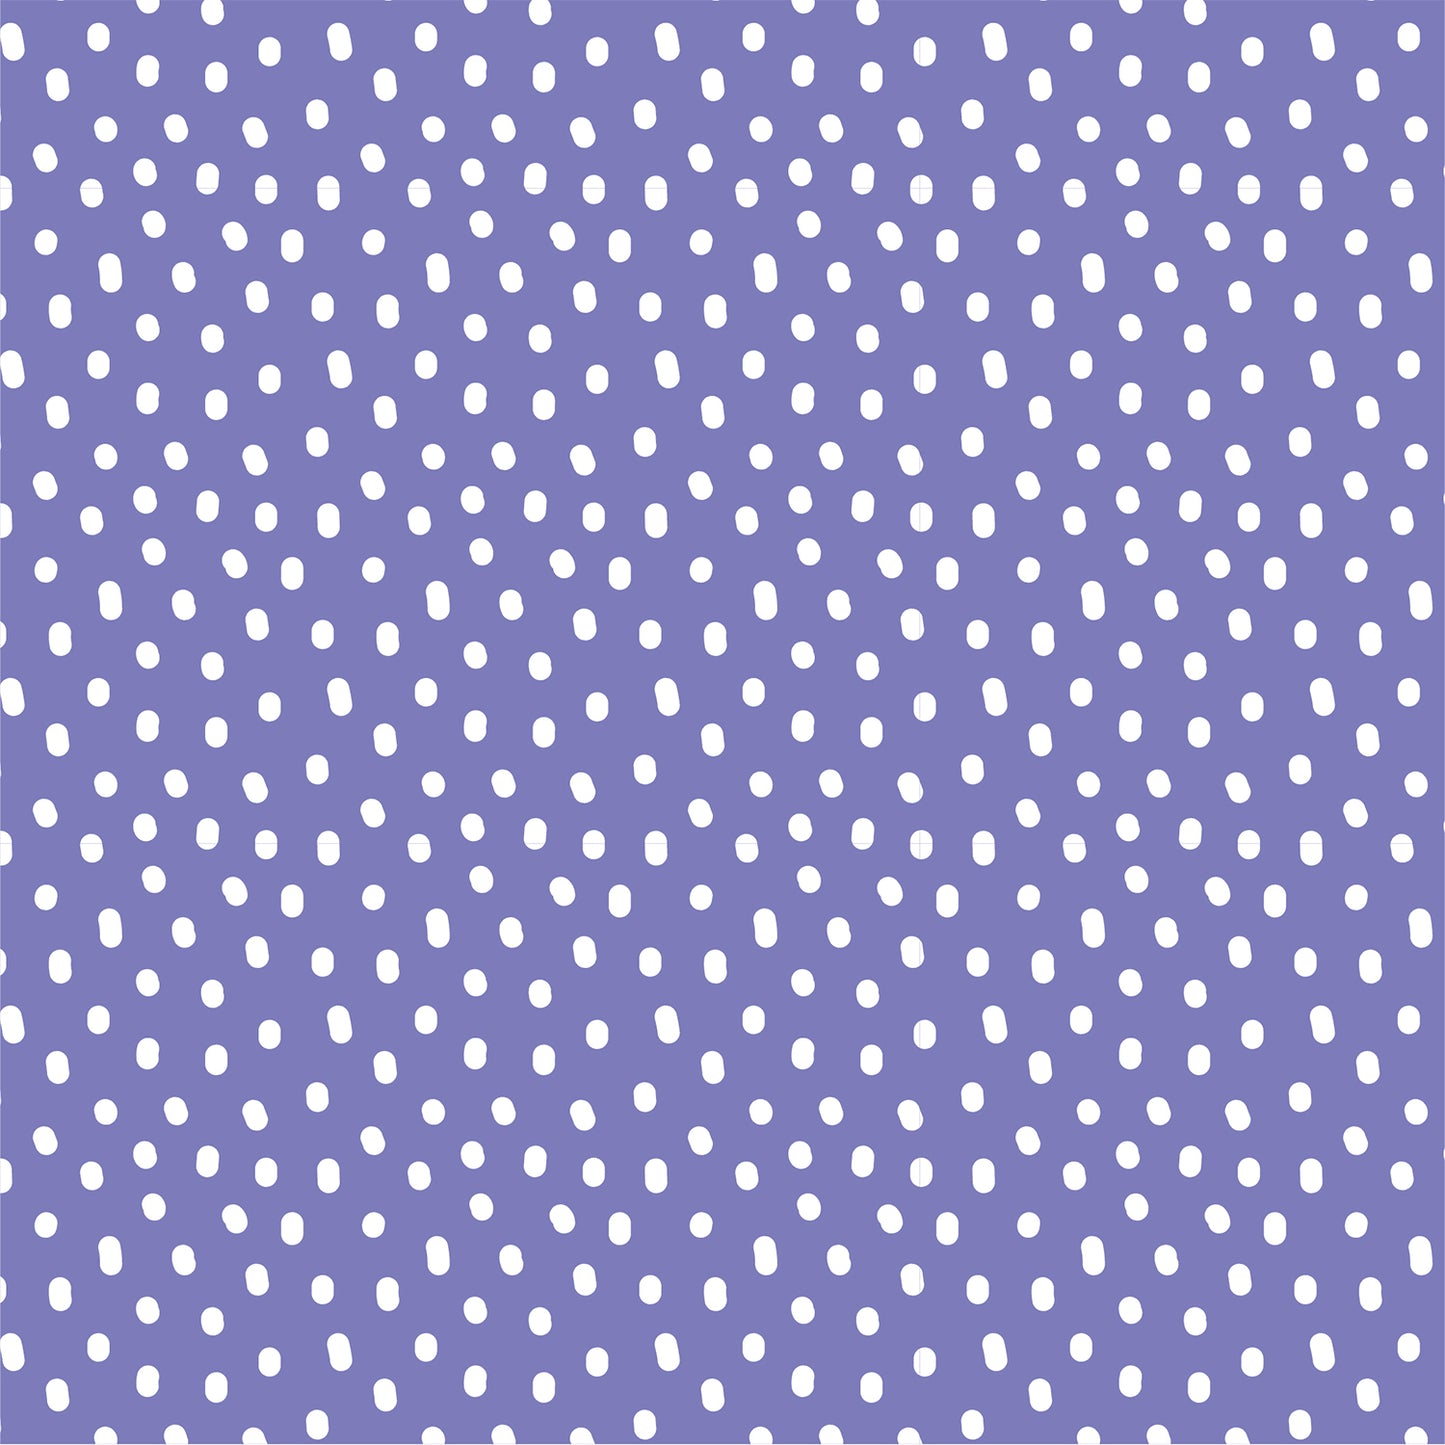 Purple Small Dot Flat Wrapping Paper Sheet Wholesale Wraphaholic